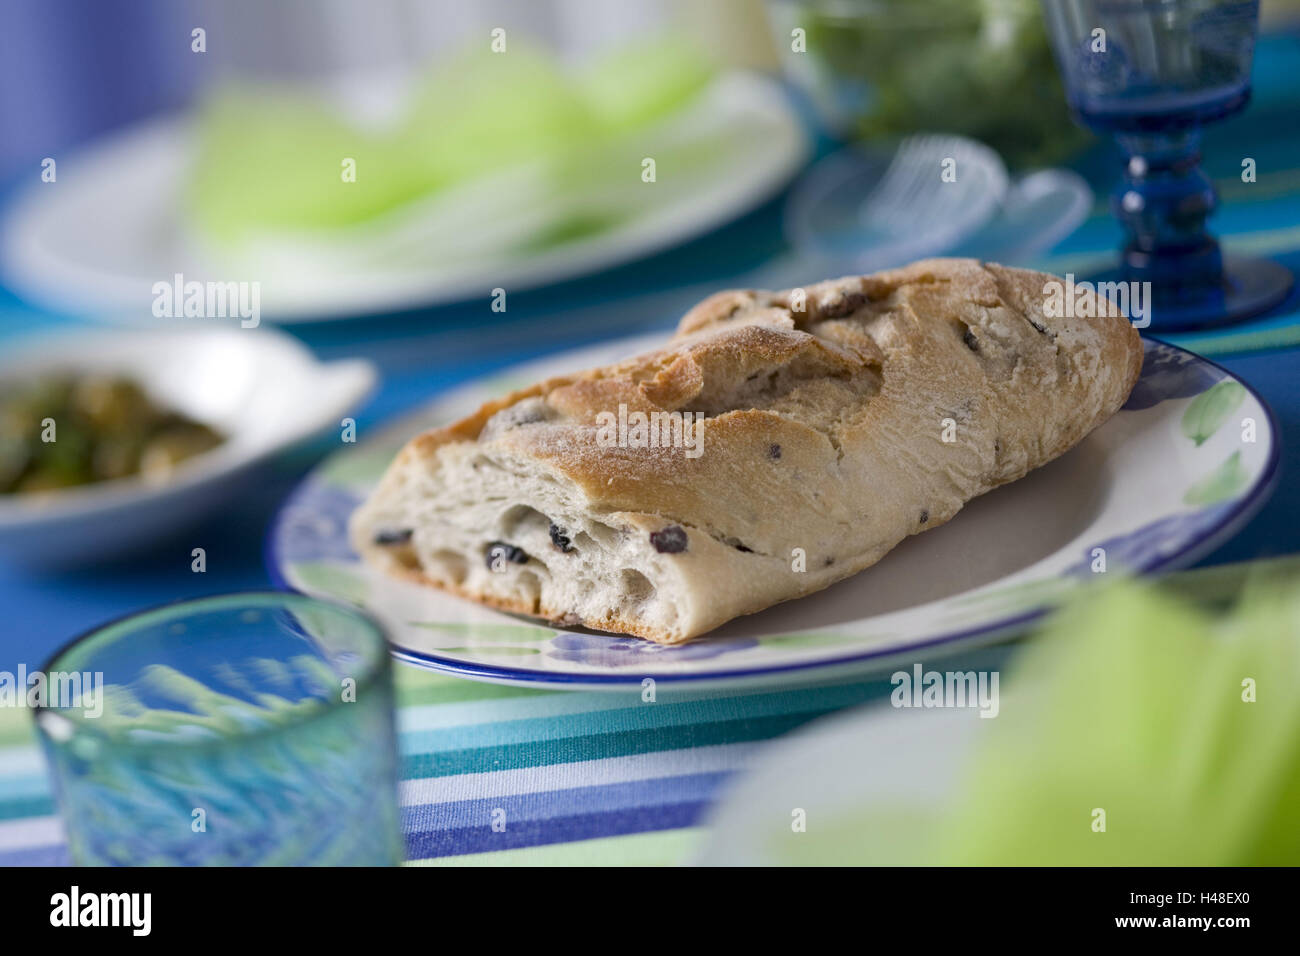 Table, covered, olive bread, Stilllife, Food, bread, white bread, plate, glass, napkins, table sets, green olives, salad server, salad, studio, Stock Photo